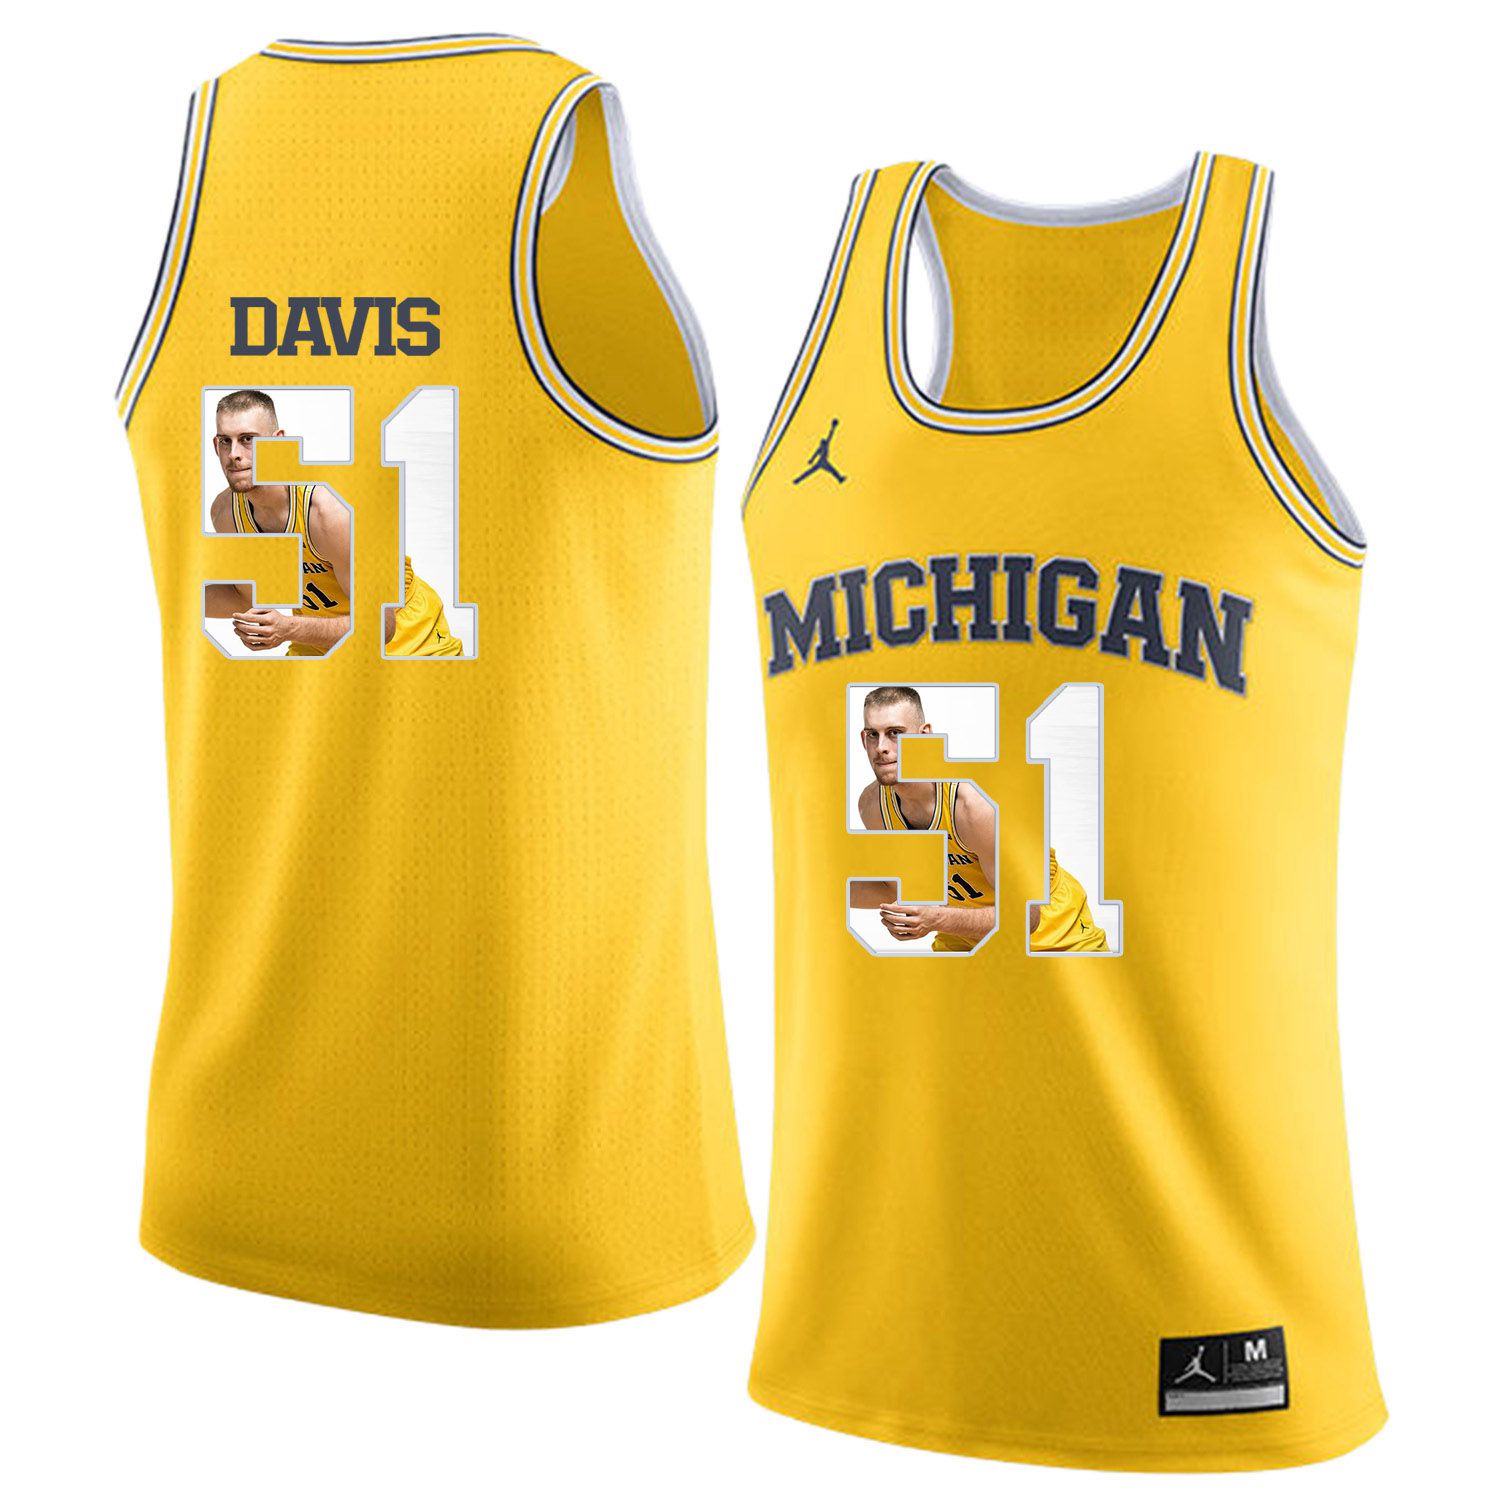 Men Jordan University of Michigan Basketball Yellow 51 DavisFashion Edition Customized NCAA Jerseys